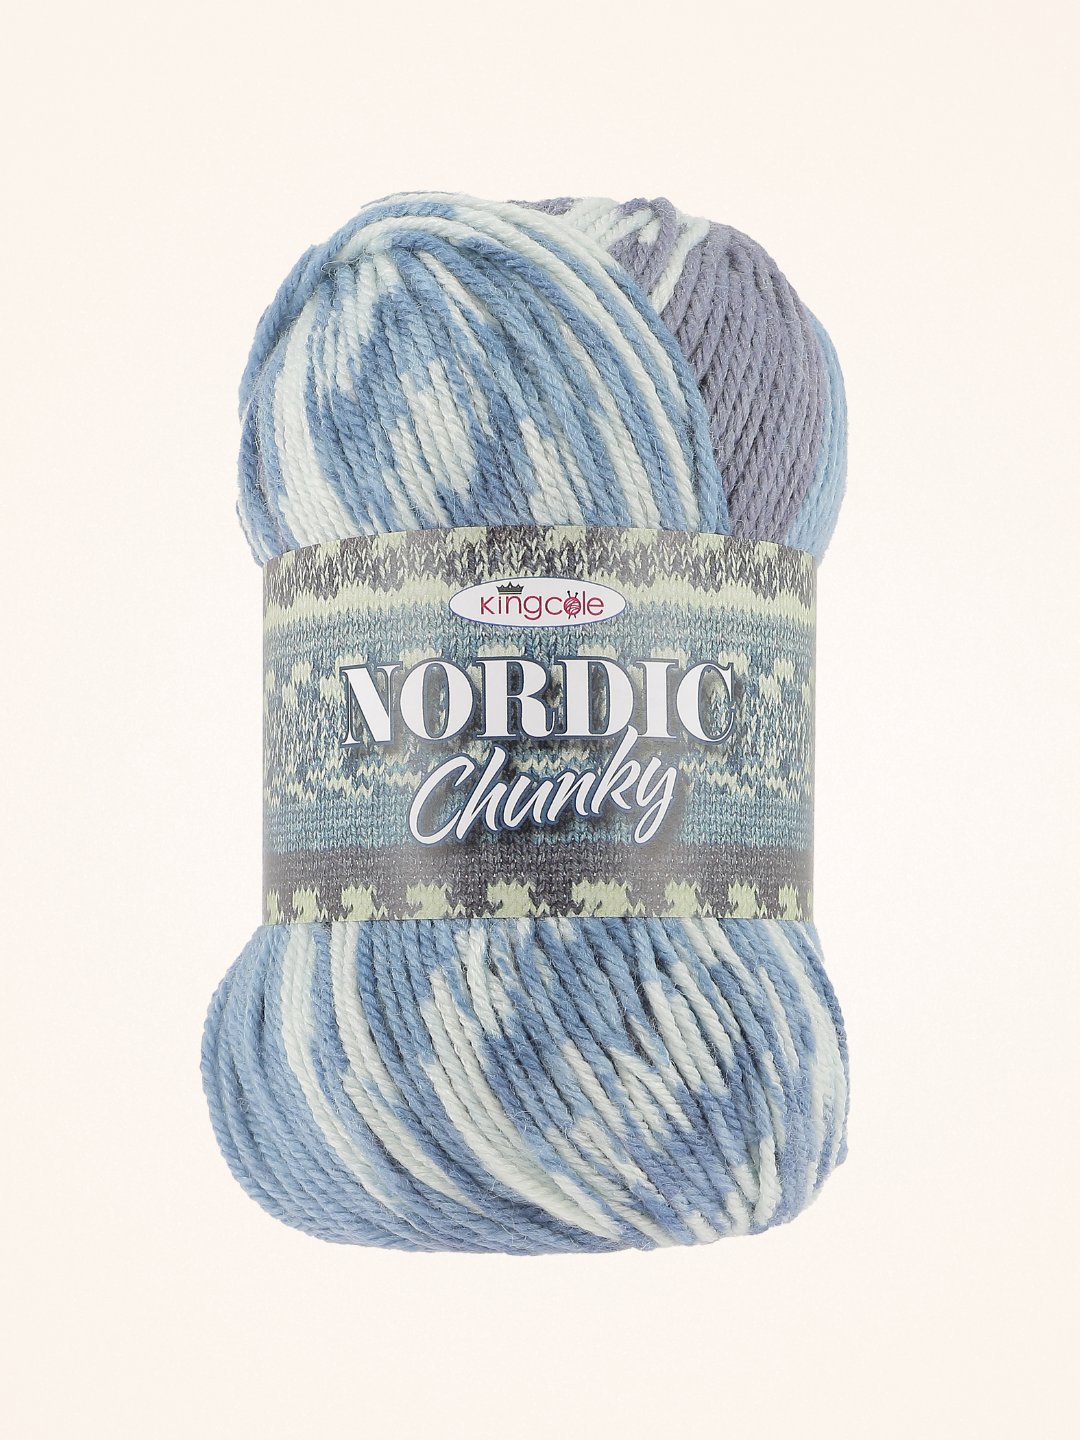 120g Fudge CHUNKY Yarn for Knitting & Crochet